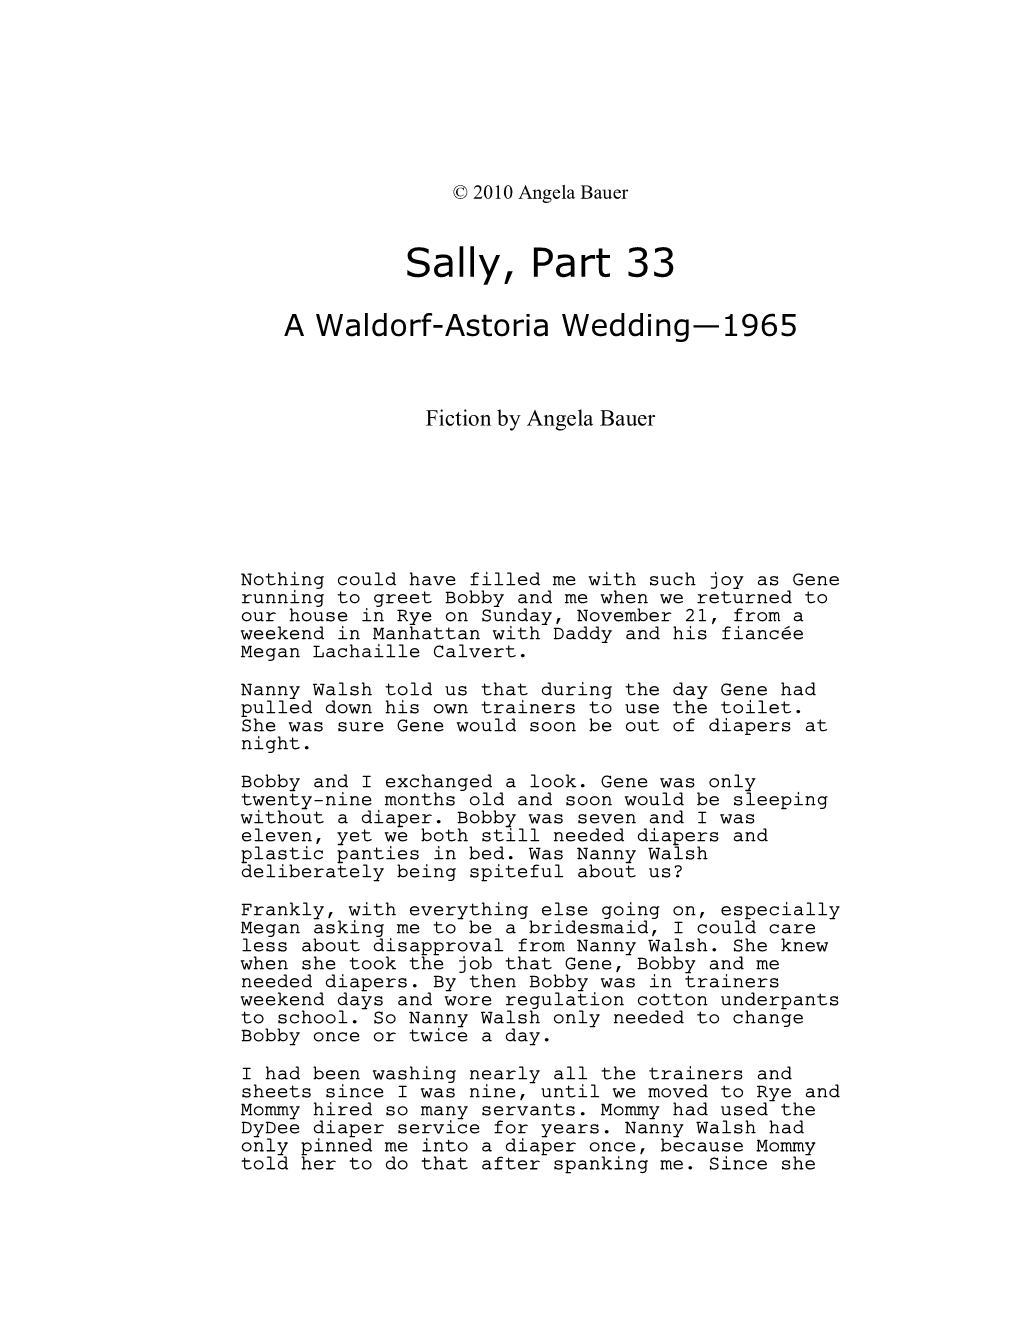 Sally, Part 33 a Waldorf-Astoria Wedding—1965